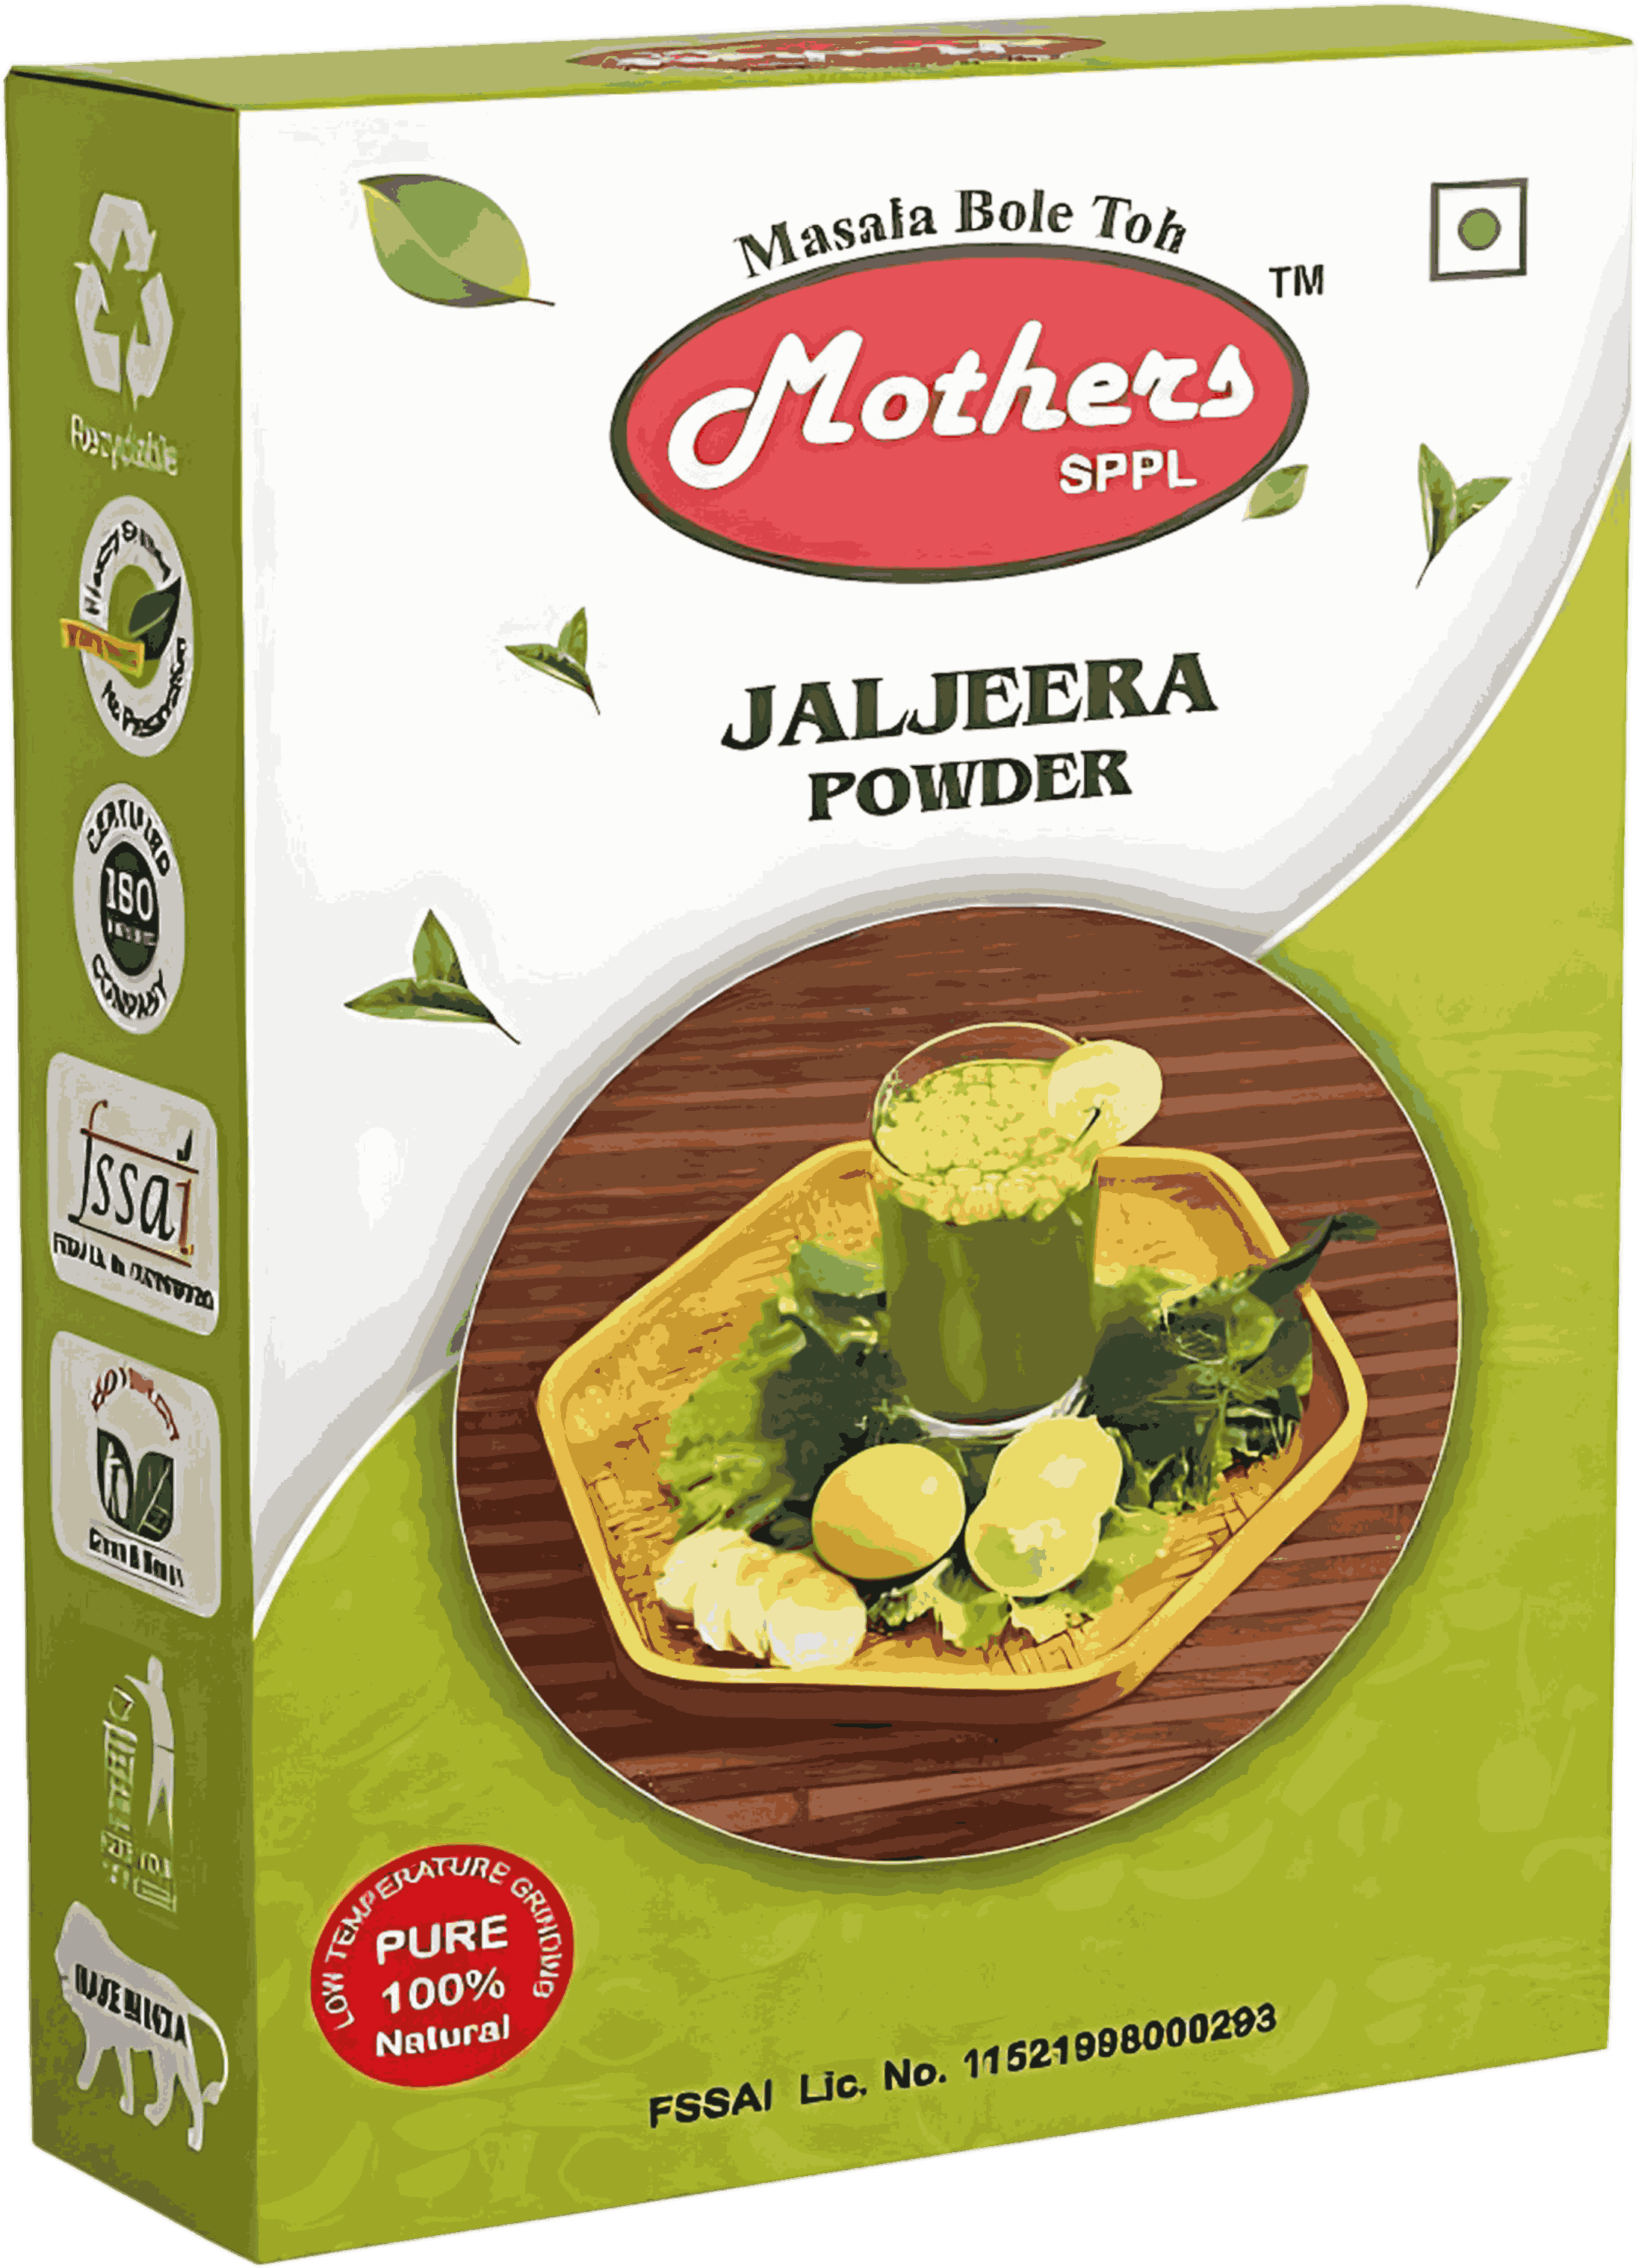 Mothers SPPL's Jaljeera Powder